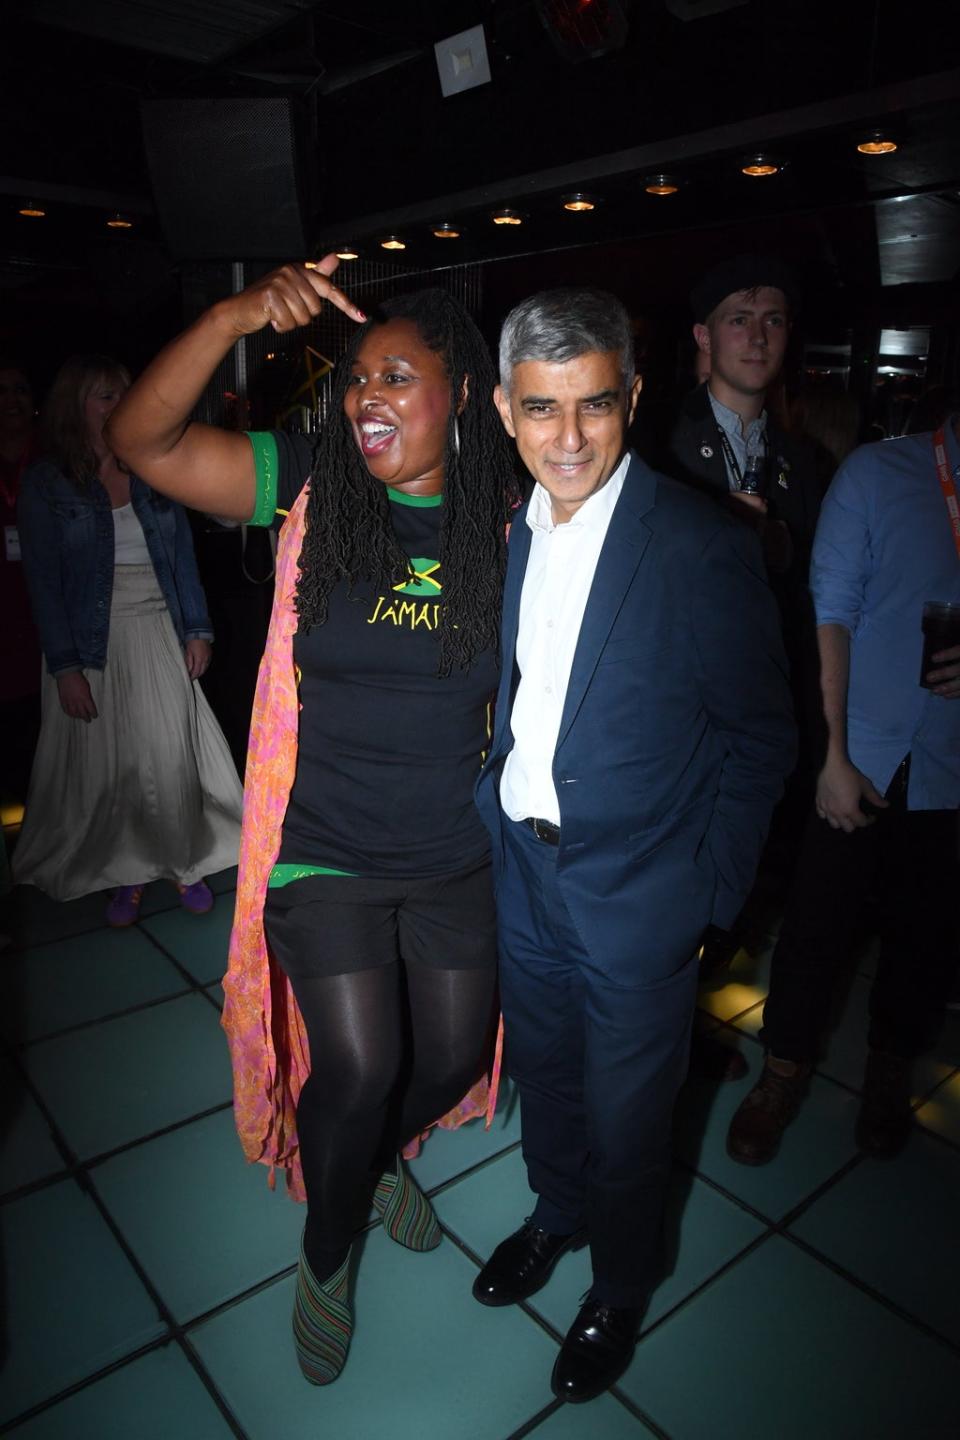 The Mayor of London joined Dawn Butler on the dance floor (Jeremy Selwyn)